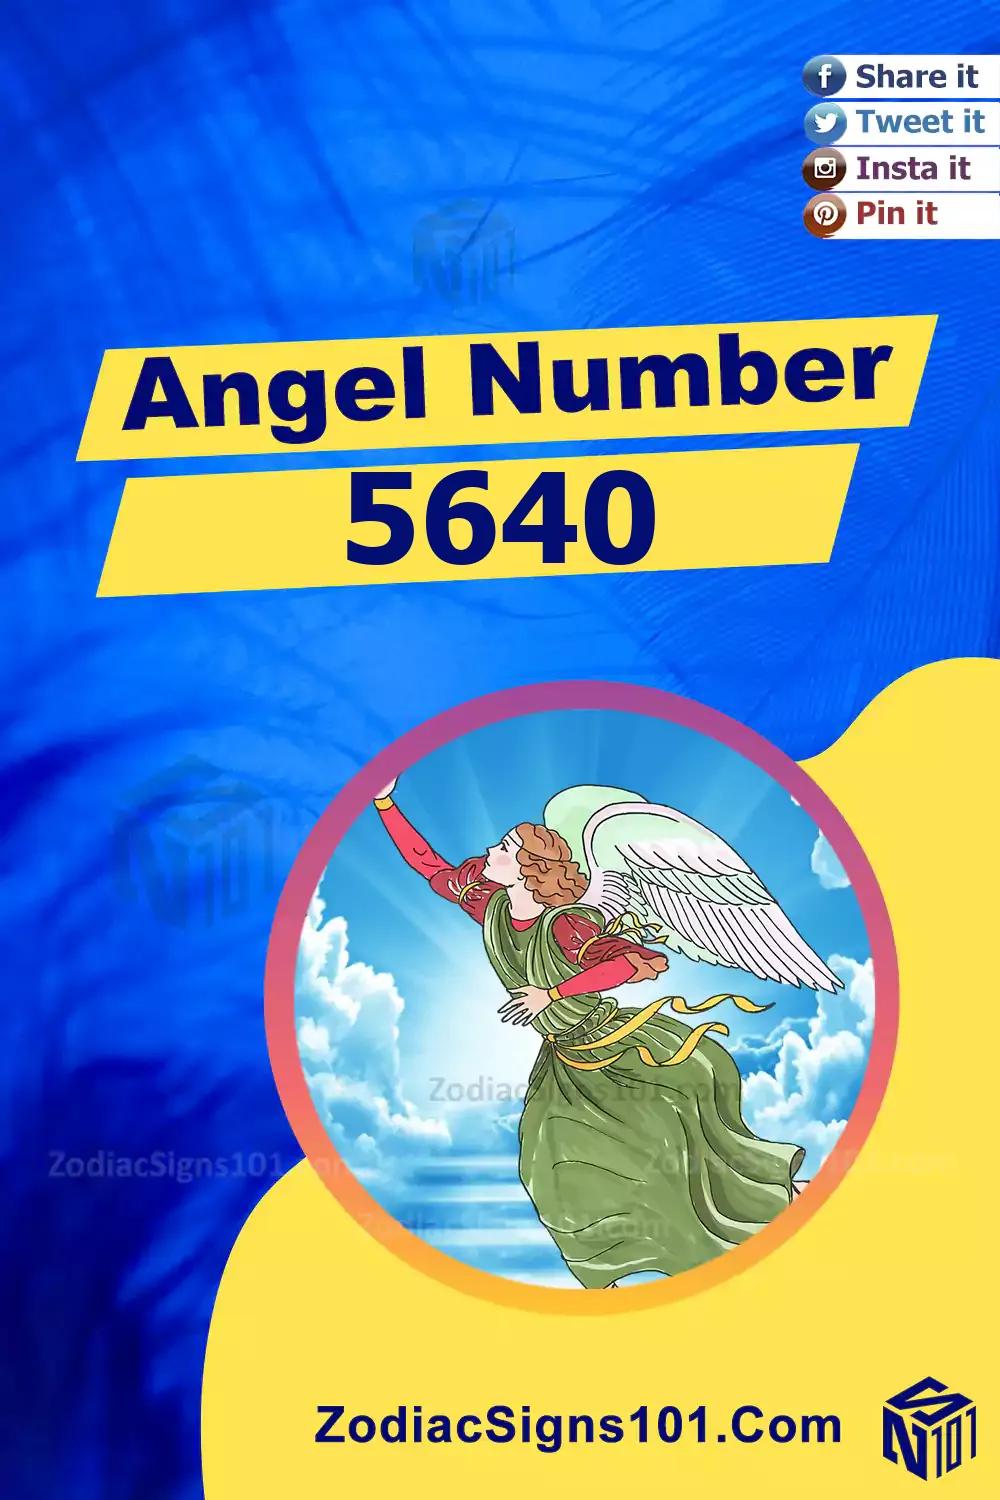 5640-Angel-Number-Meaning.jpg